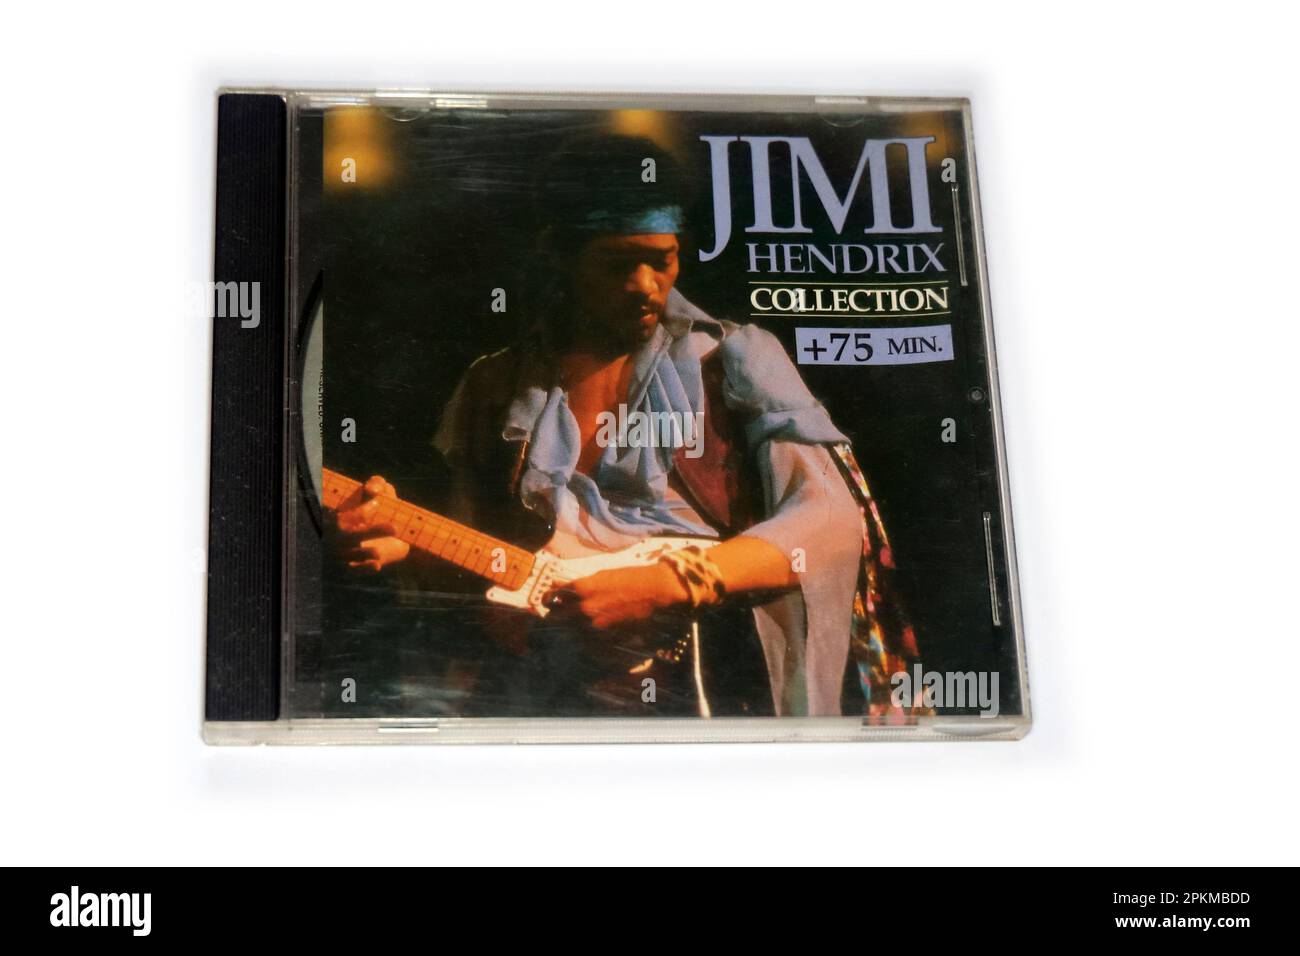 Jimi Hendrix  - Collection. Music CD. Stock Photo